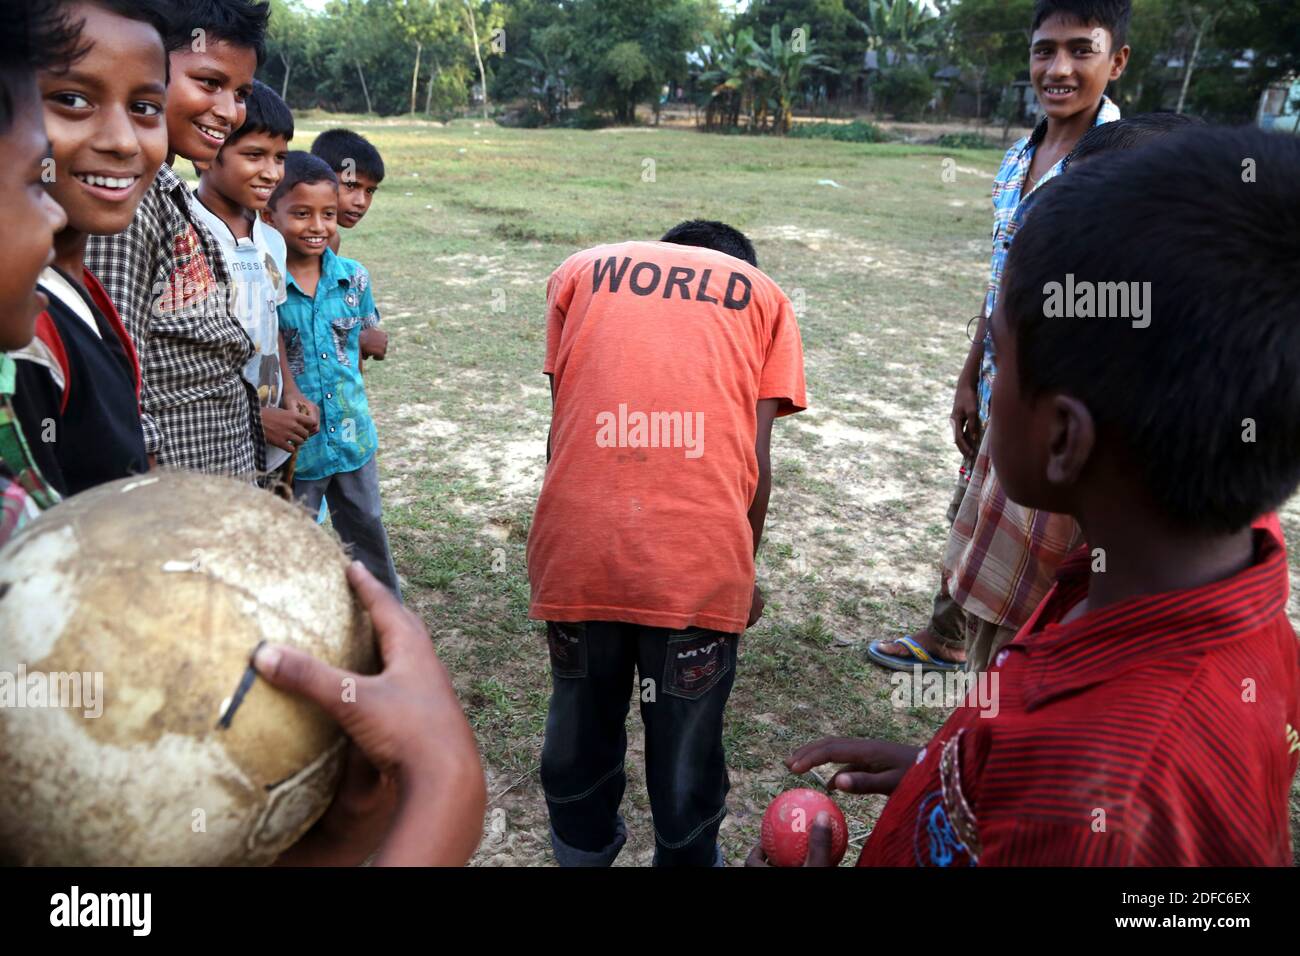 Bangladesh, happy smiling children play soccer with WORLD t-shirt in Sreemangal Stock Photo